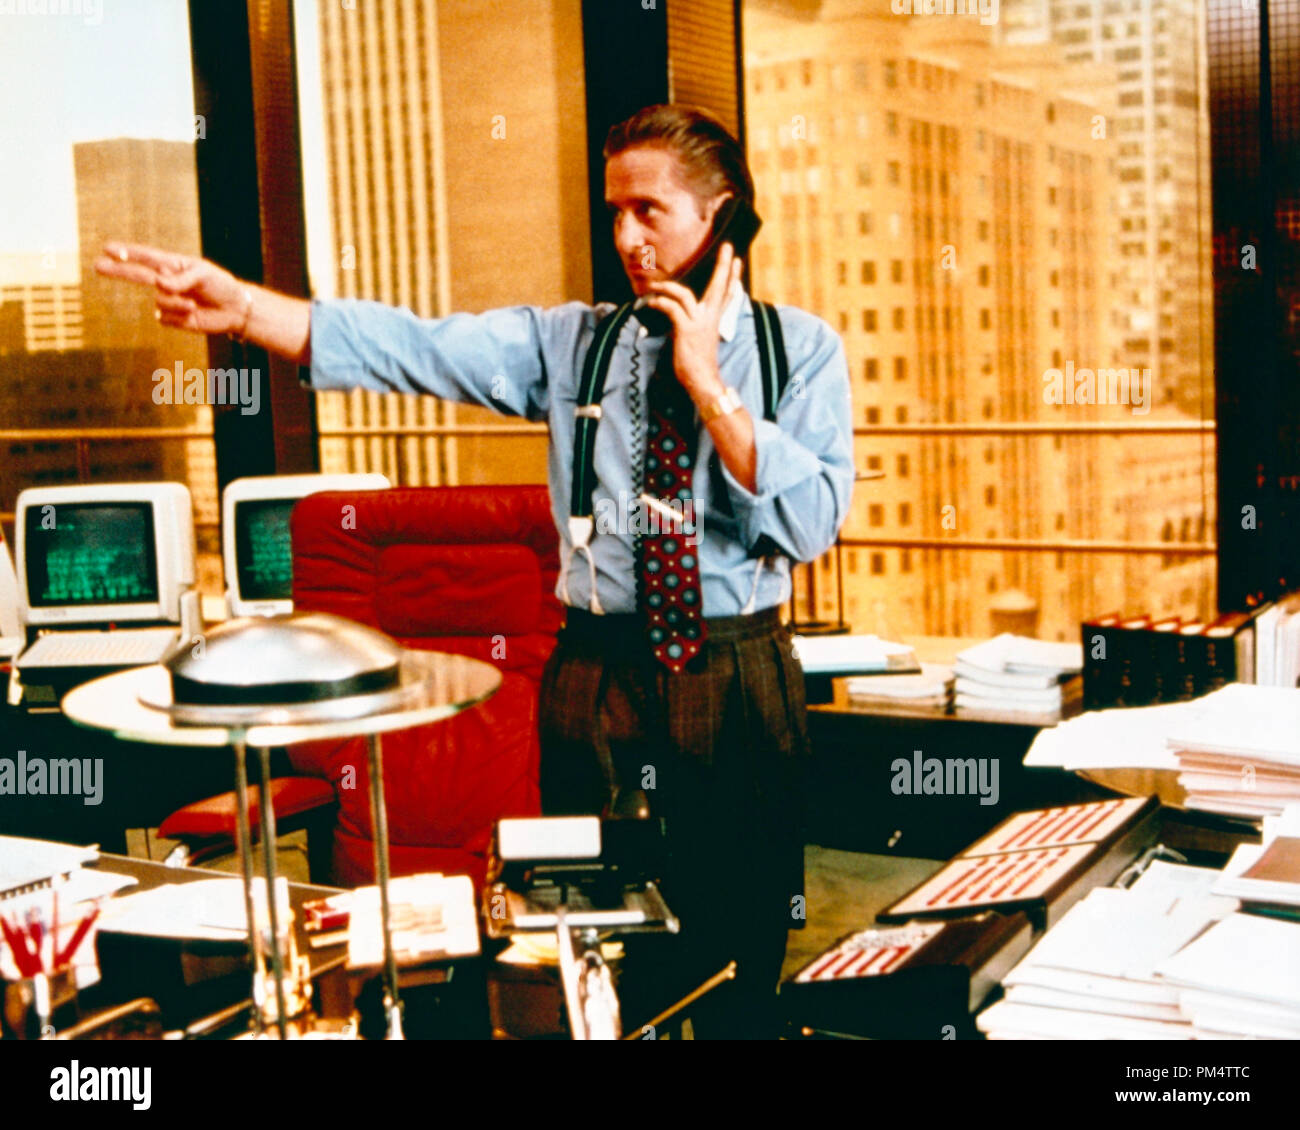 Michael Douglas 'Wall Street' 1987 Stock Photo